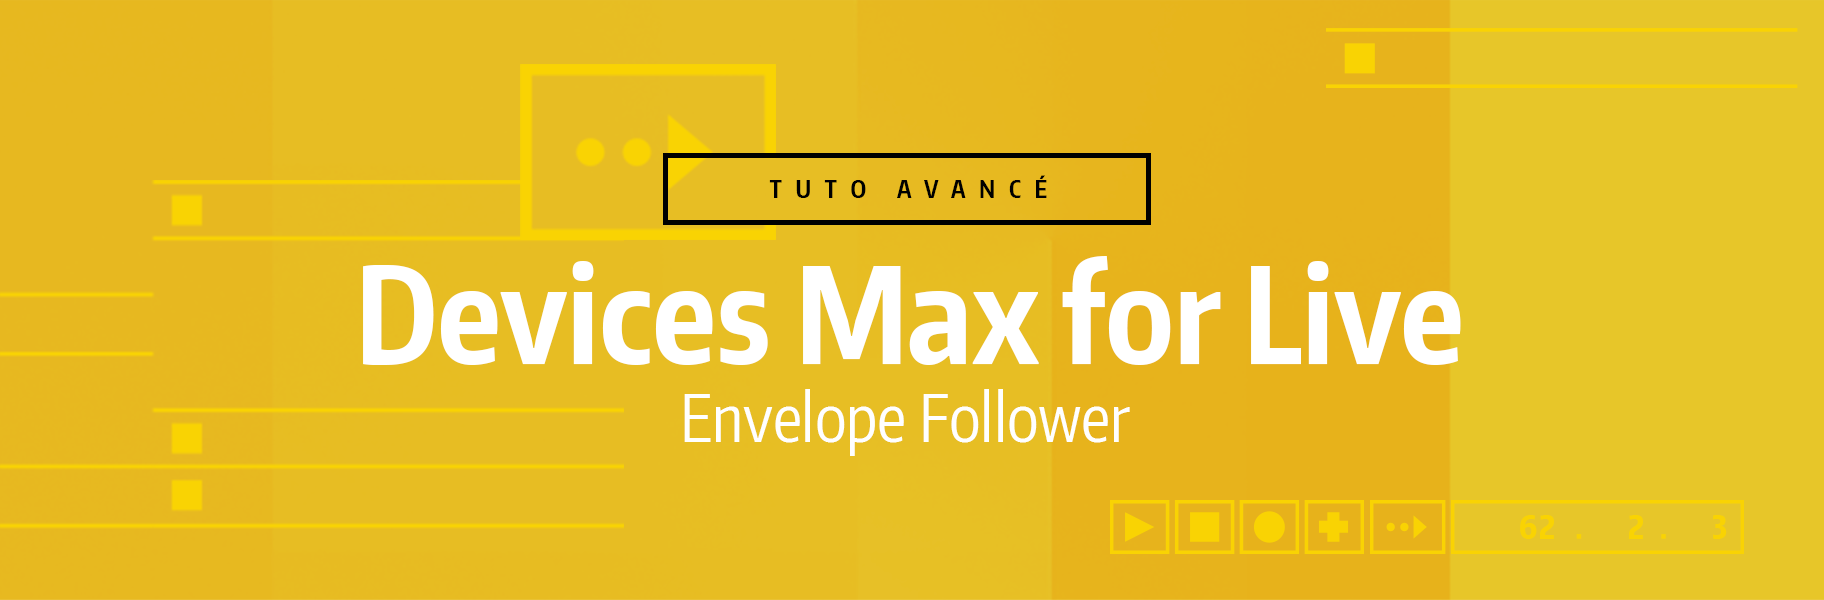 Tutoriel Ableton Live - Devices Max for Live - Envelope Follower